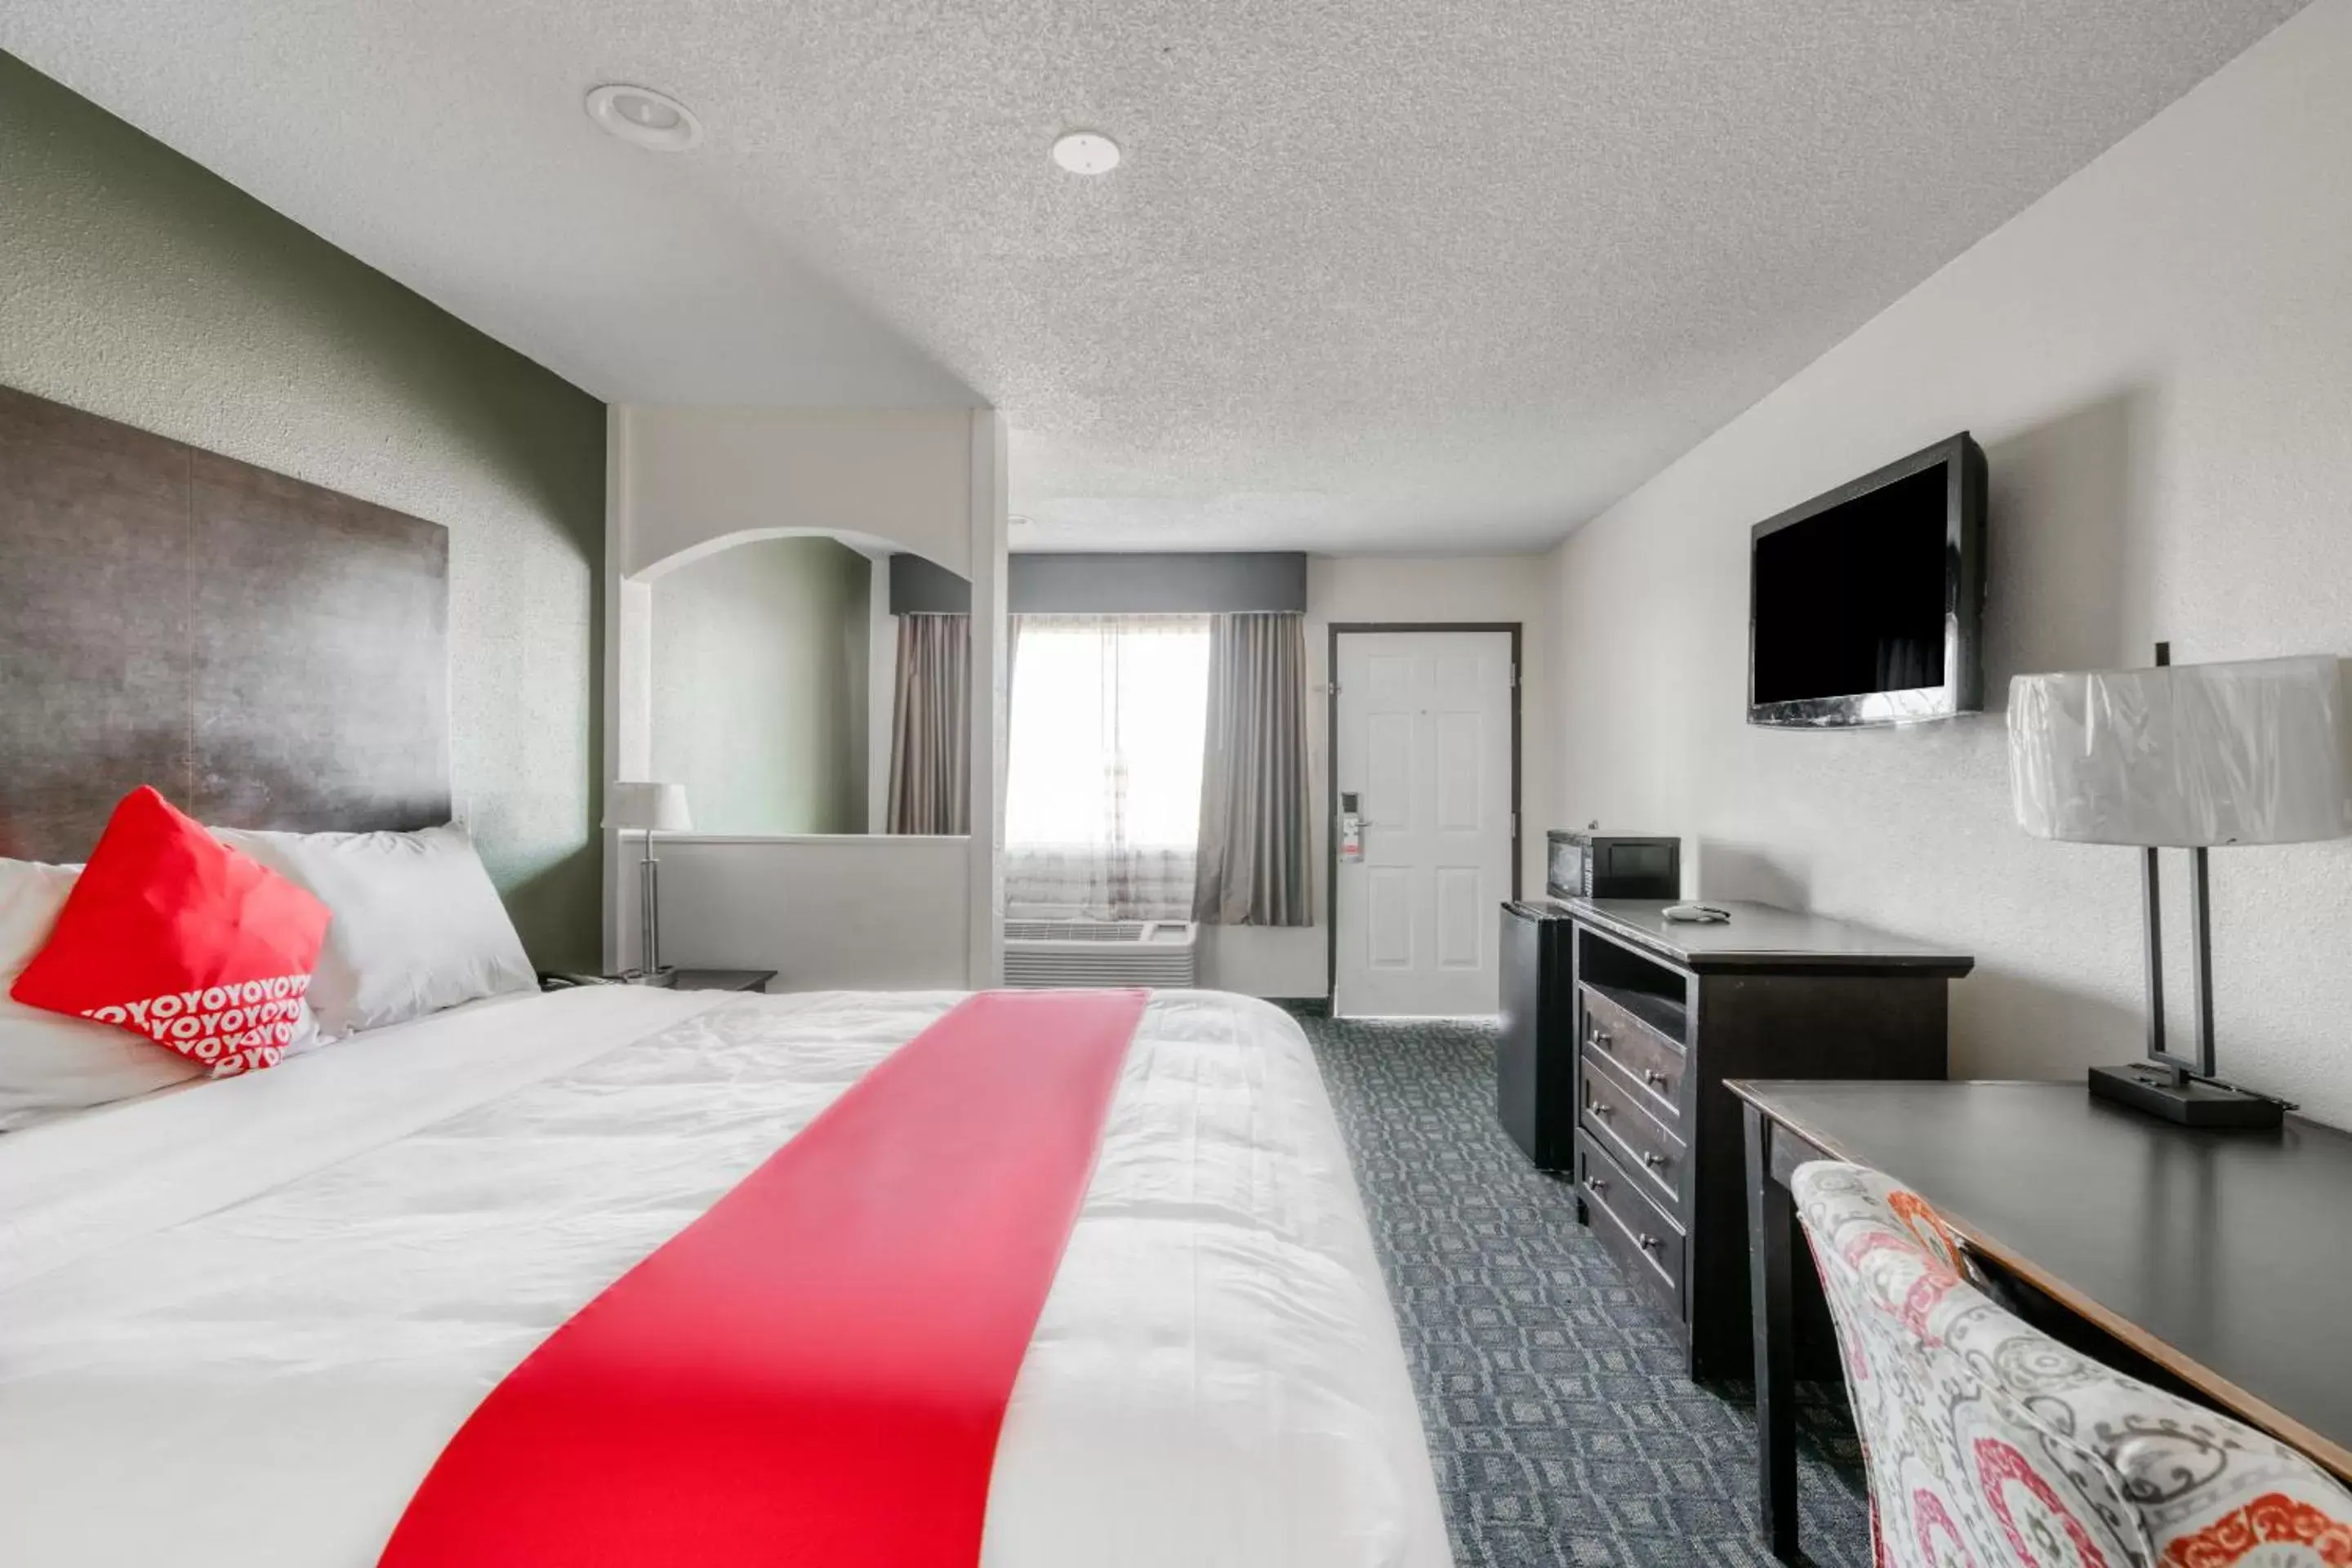 Bedroom in OYO Hotel Rosenberg TX I-69